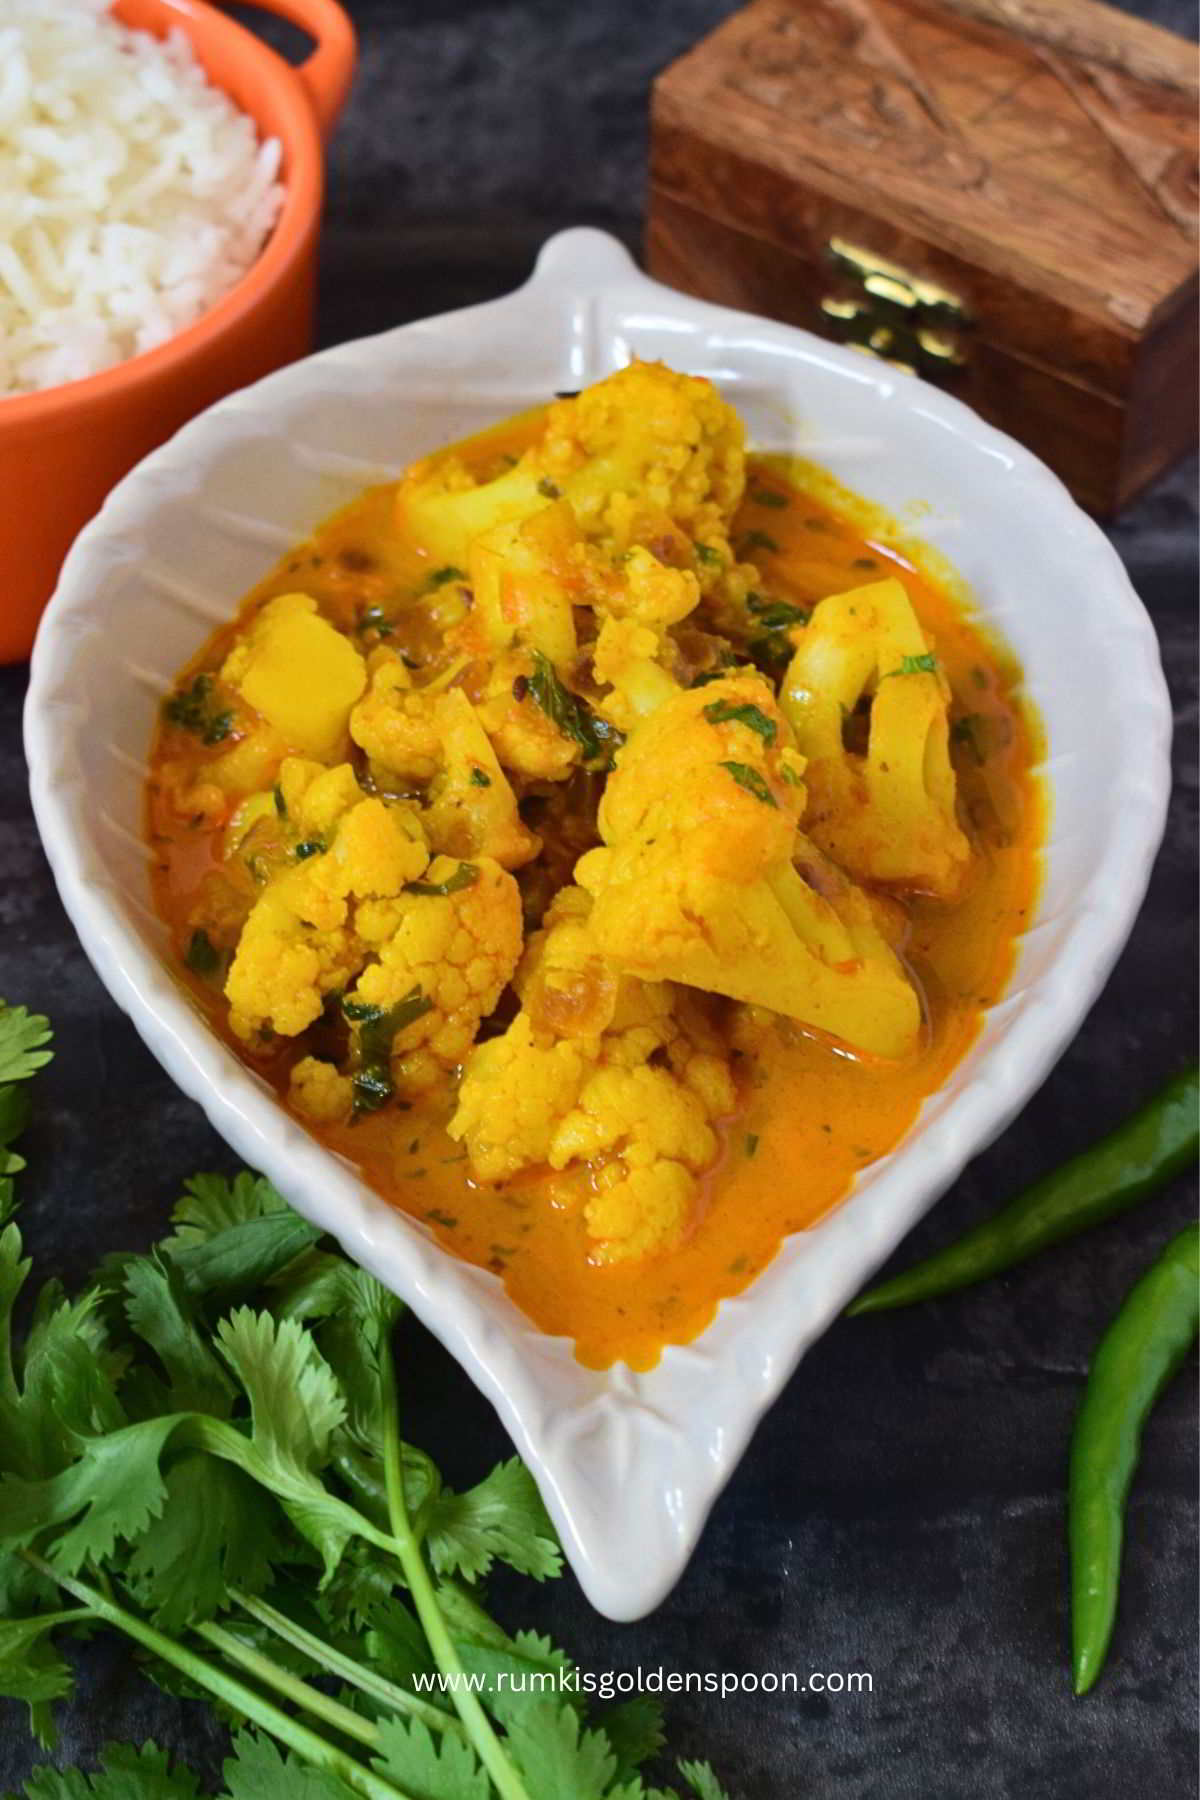 dahi gobi, dahi wali gobhi, dahi wali gobi, dahi aloo gobi recipe, dahi gobhi recipe, cauliflower yogurt curry, cauliflower curry recipe, recipe for cauliflower curry, recipe of cauliflower curry, recipe with broccoli curry, Indian veg recipe, cauliflower recipe Indian, gobi ki sabji, Indian food, curry with yogurt, yogurt curry recipe vegetarian, health benefits of cauliflower, how to make broccoli sabzi, Vegetarian recipes in India, Indian curry, Indian curry recipe, Rumki's Golden Spoon